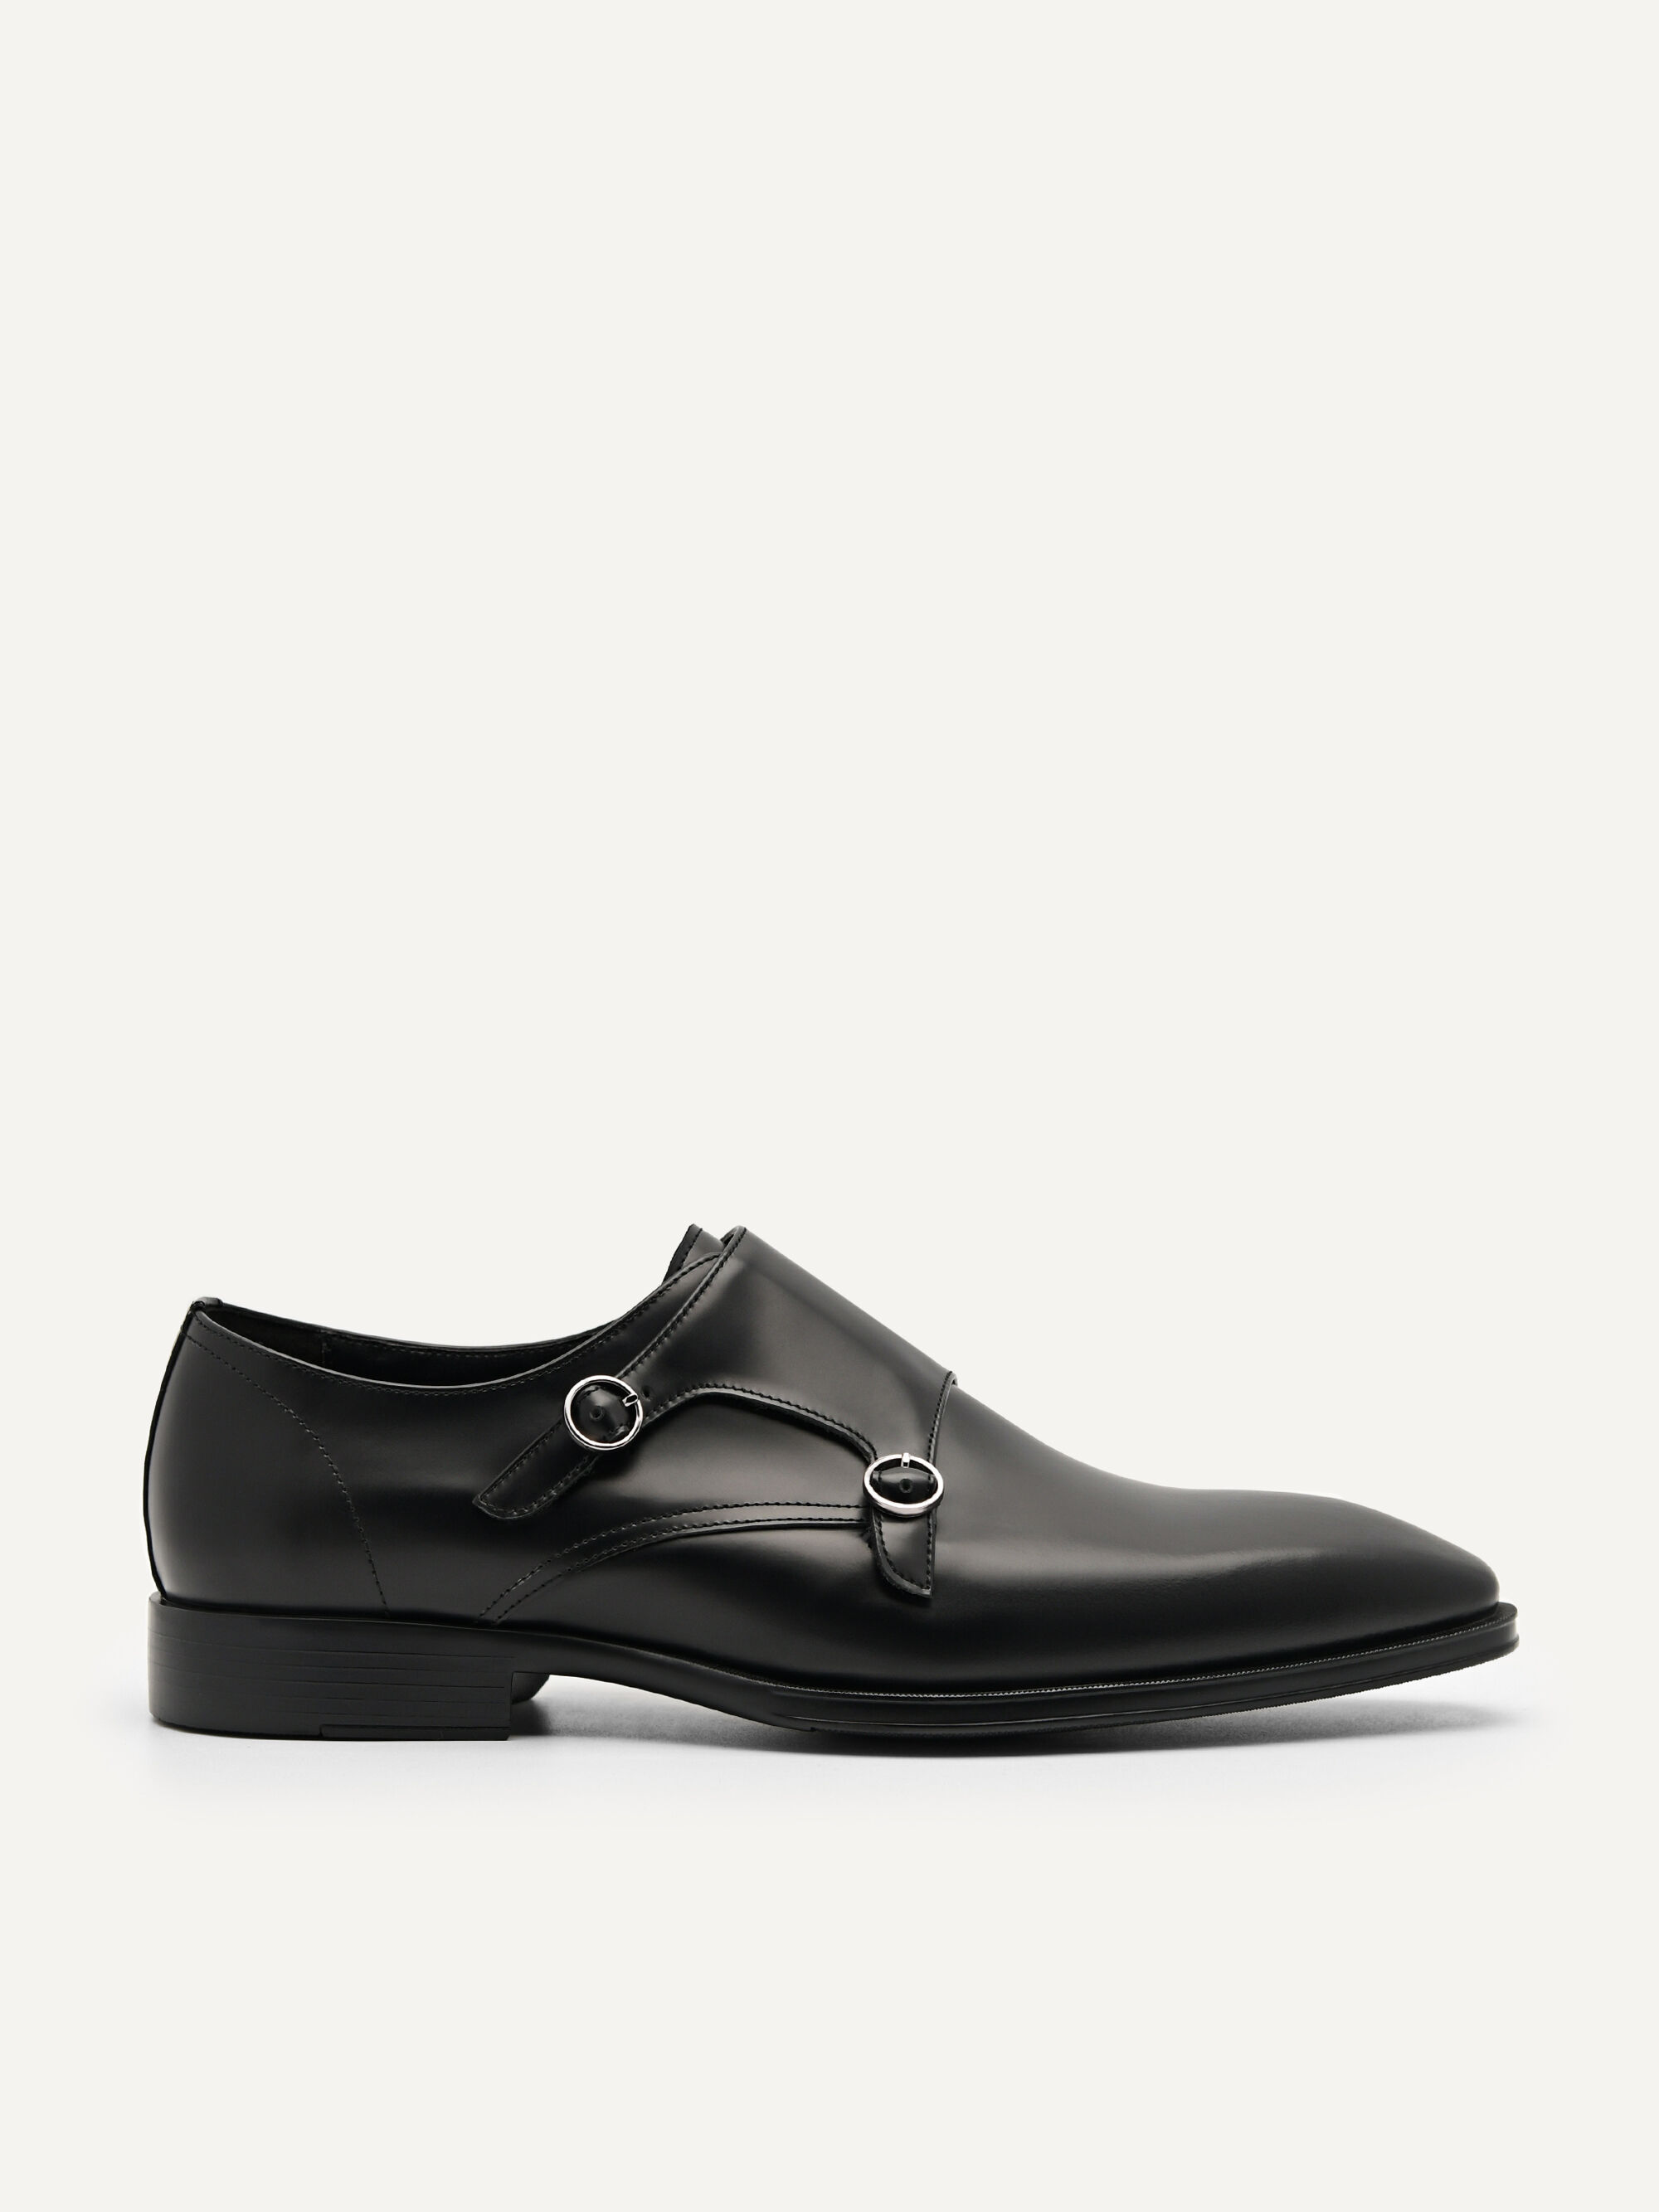 Chopo shoes discount 64% Navy Blue 44                  EU MEN FASHION Footwear Elegant 